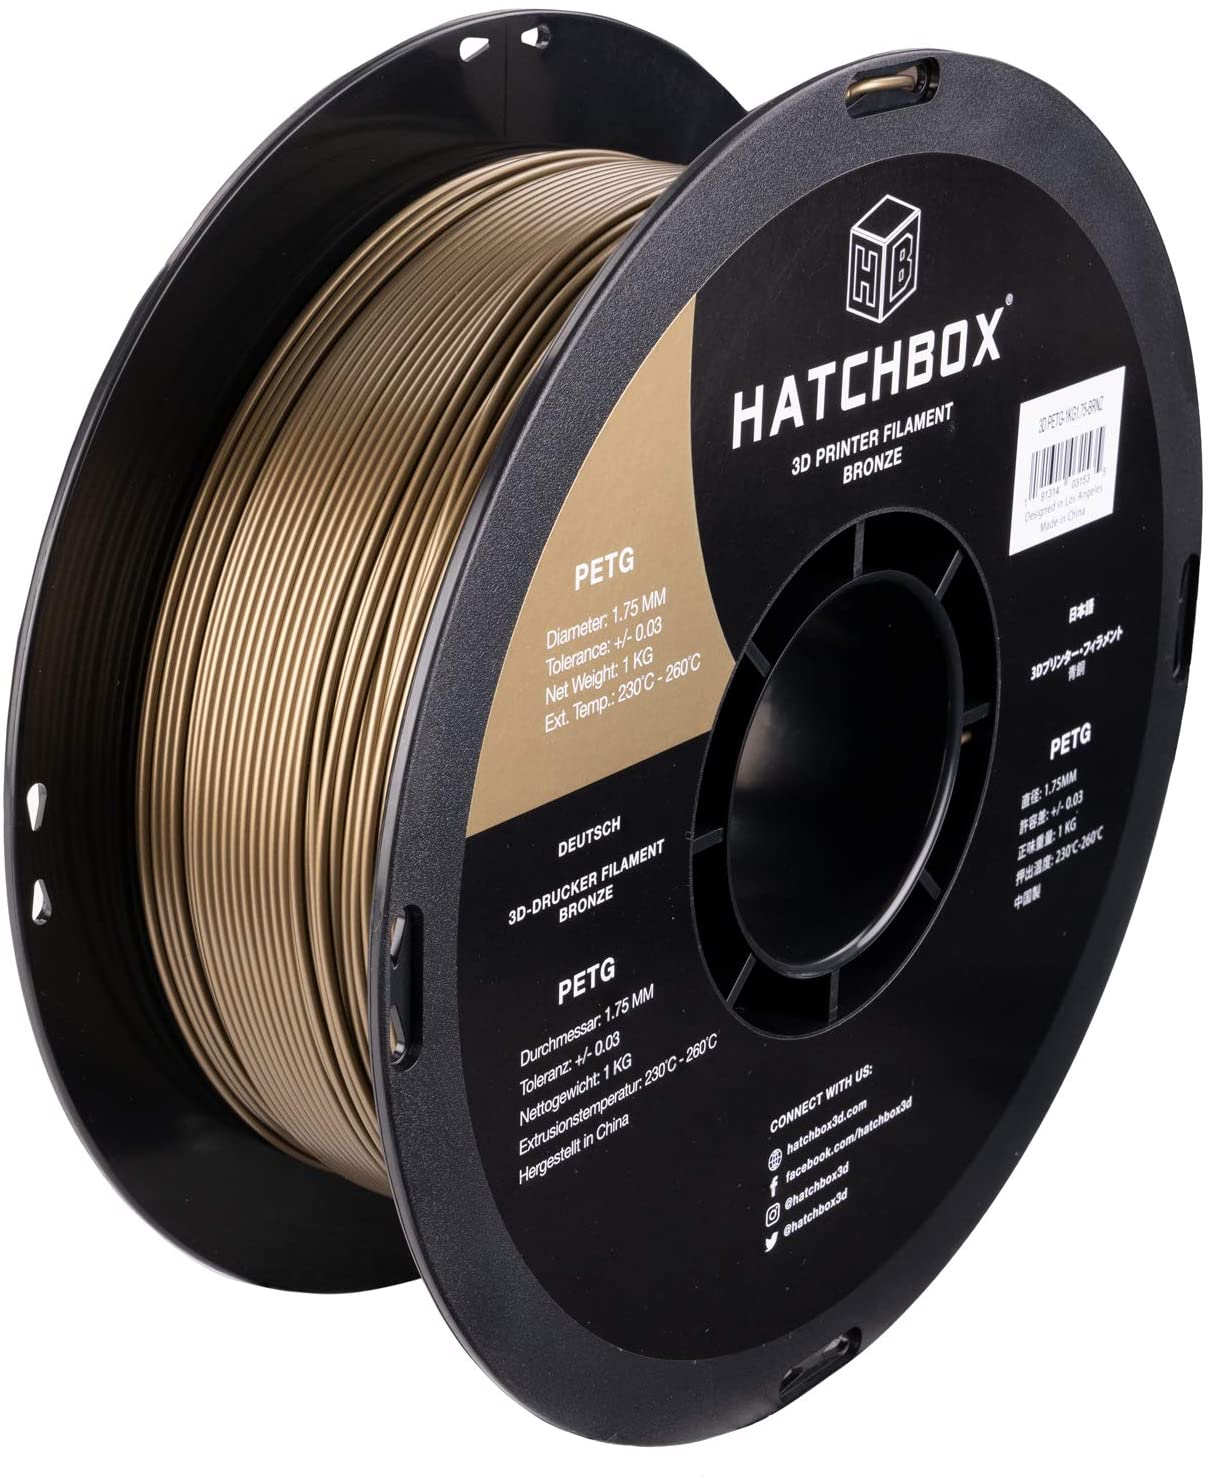 HATCHBOX PETG 3D Printer Filament